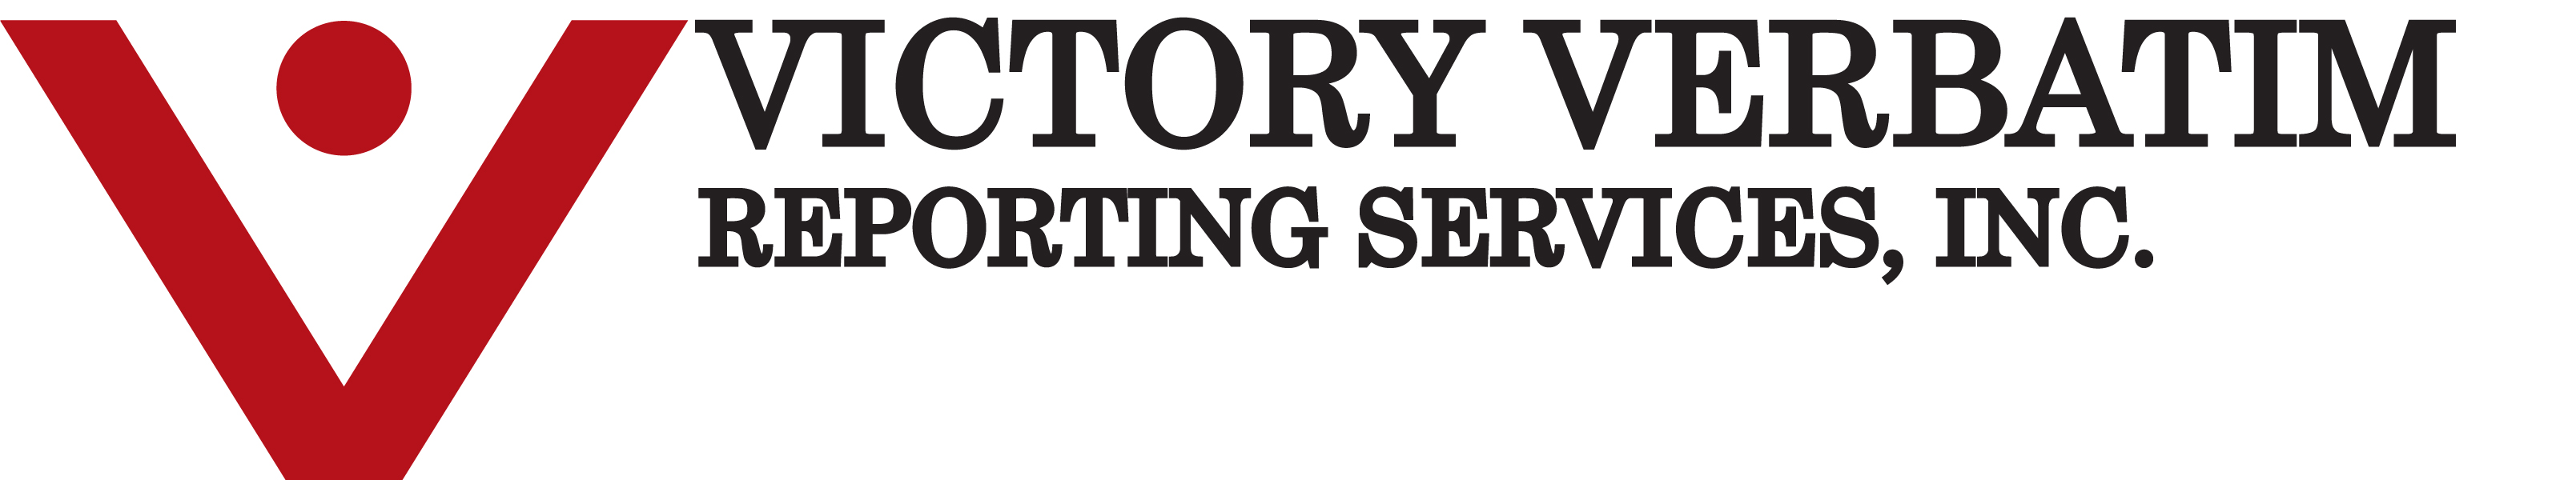 Victory Verbatim Reporting Services, Inc. Logo